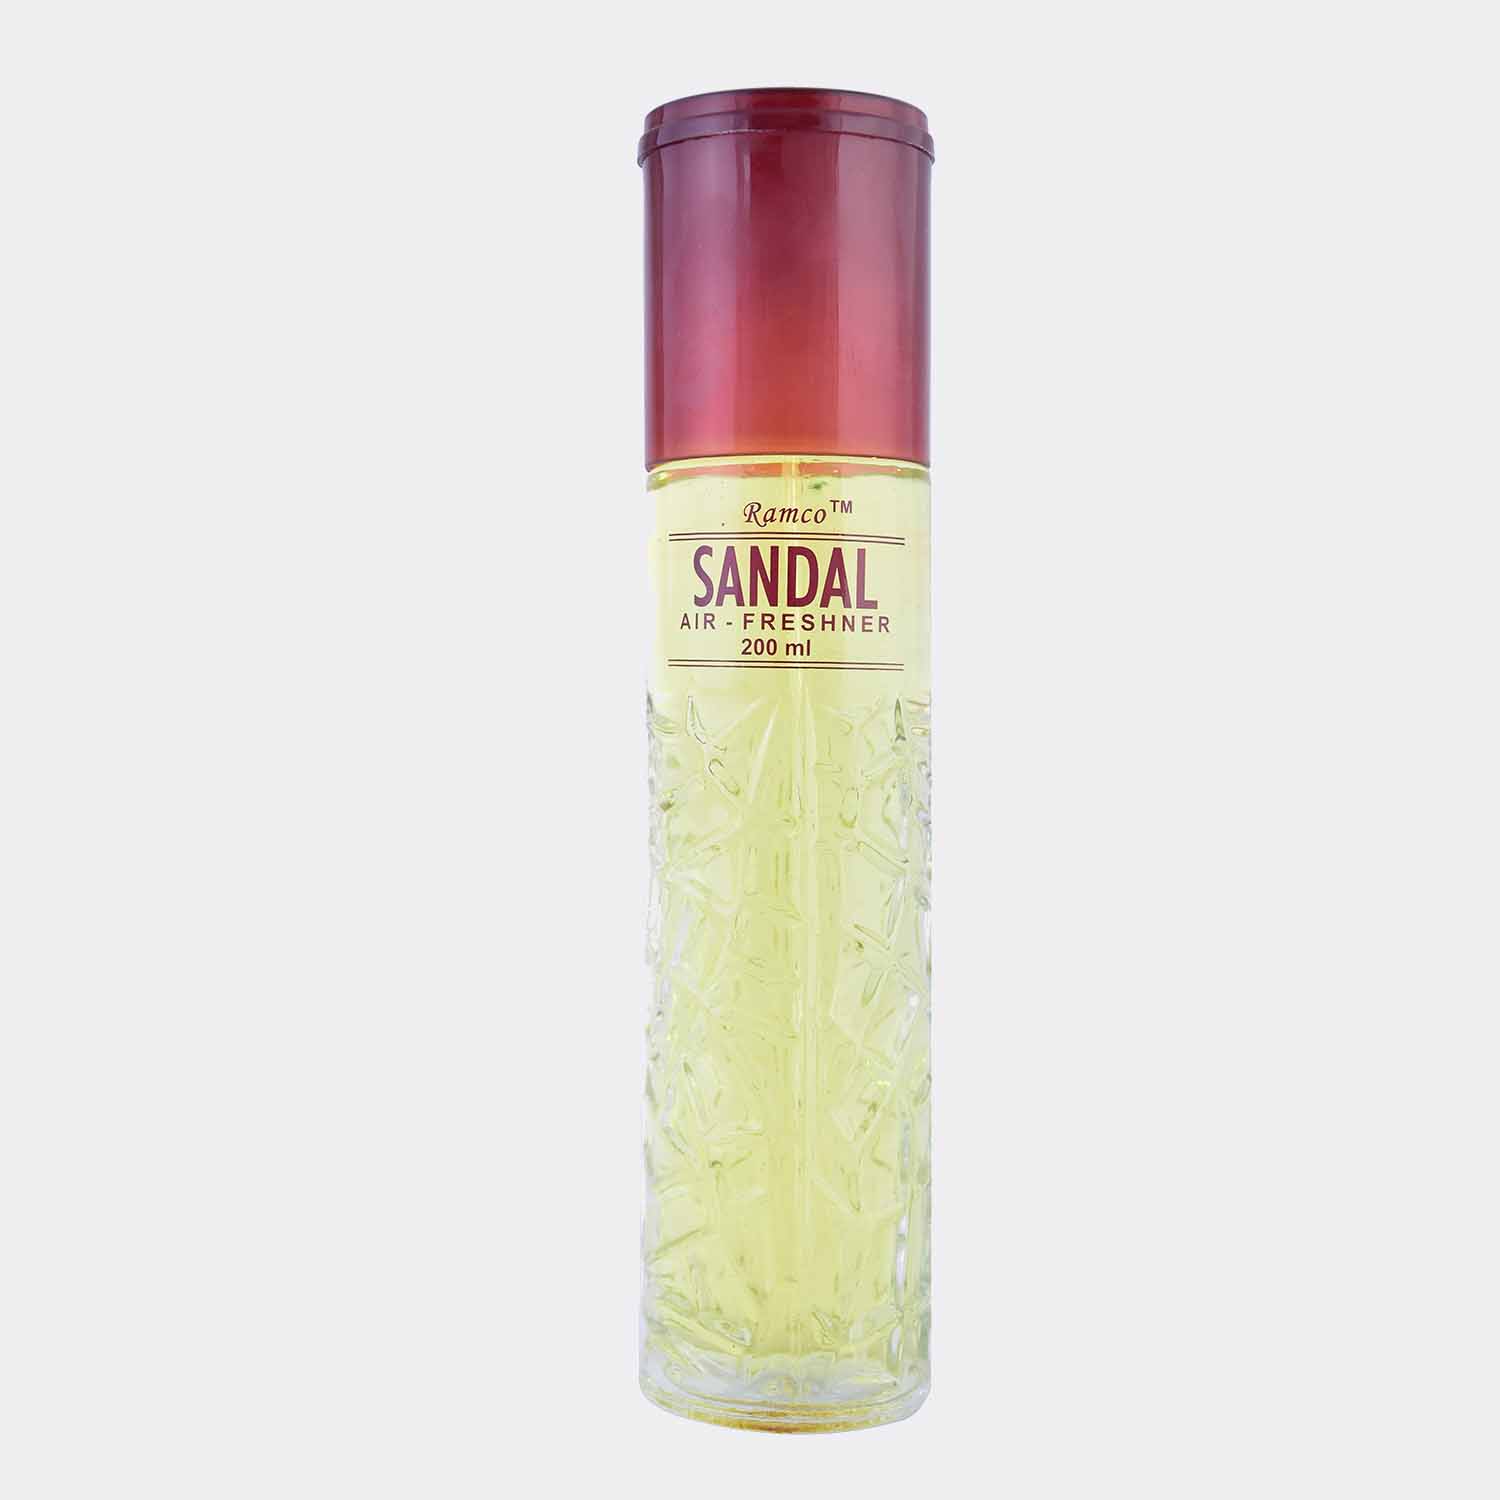 Attar Sandal - Chandan Perfume for Pooja Purpose , Online Perfume Store